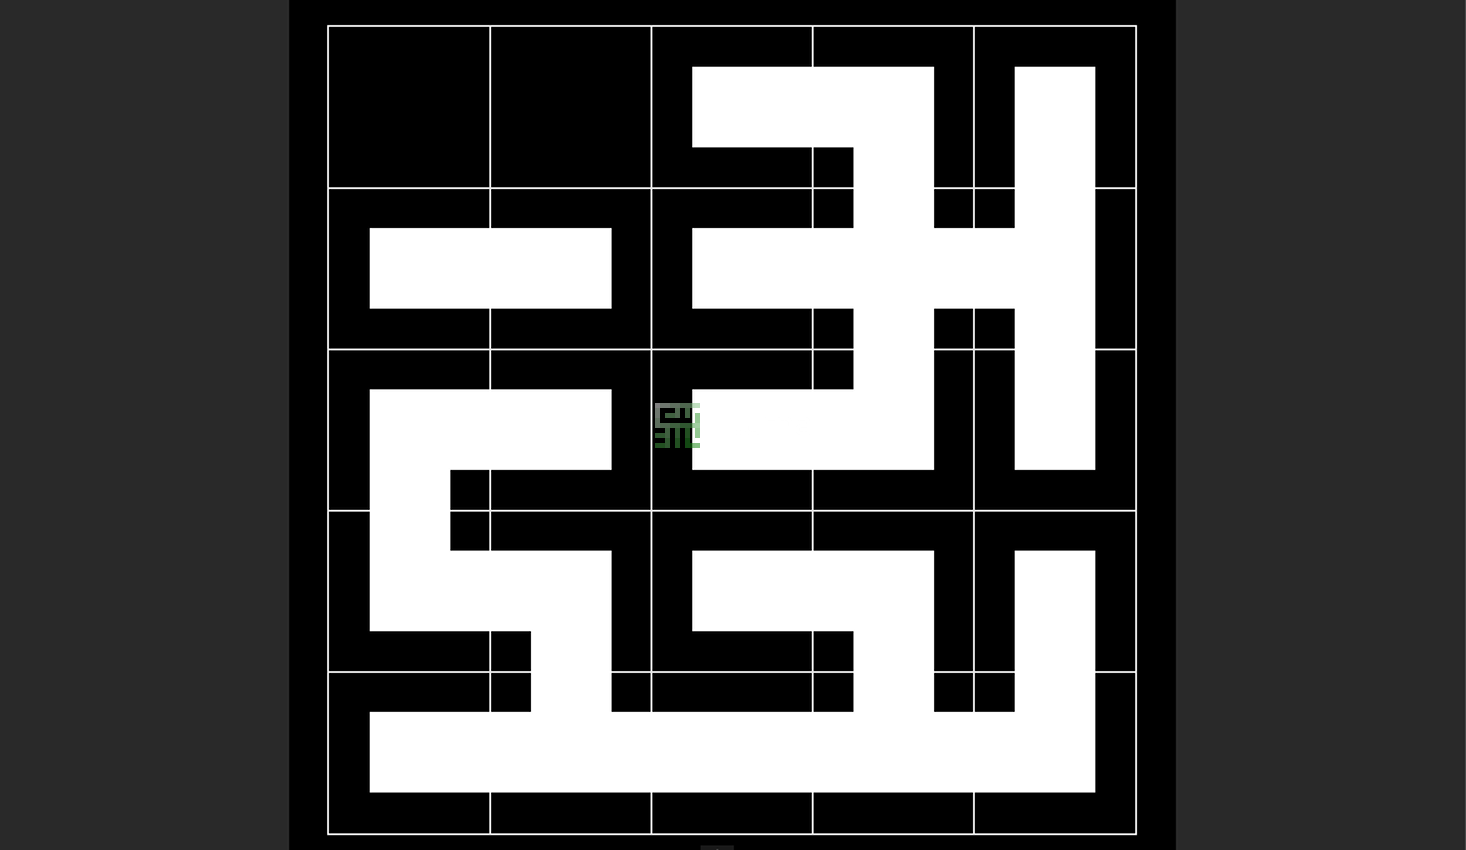 Kruskal's Maze Creation Visualization